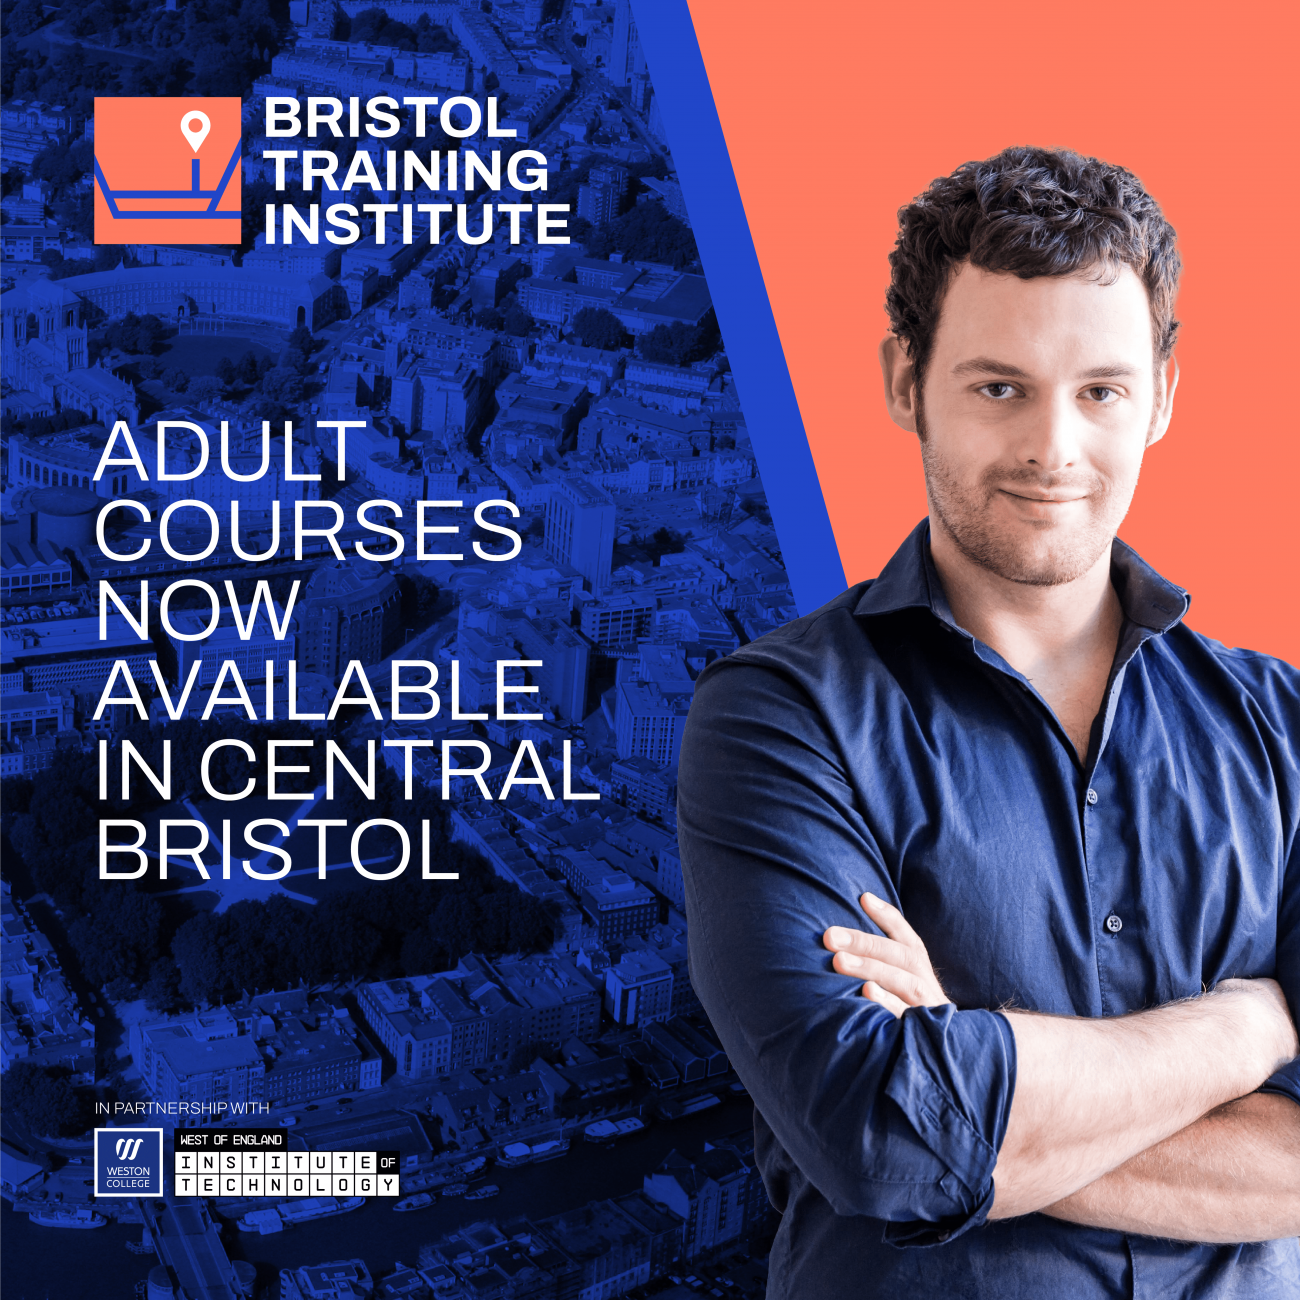 Man smiling with Bristol Training Institute branding behind him